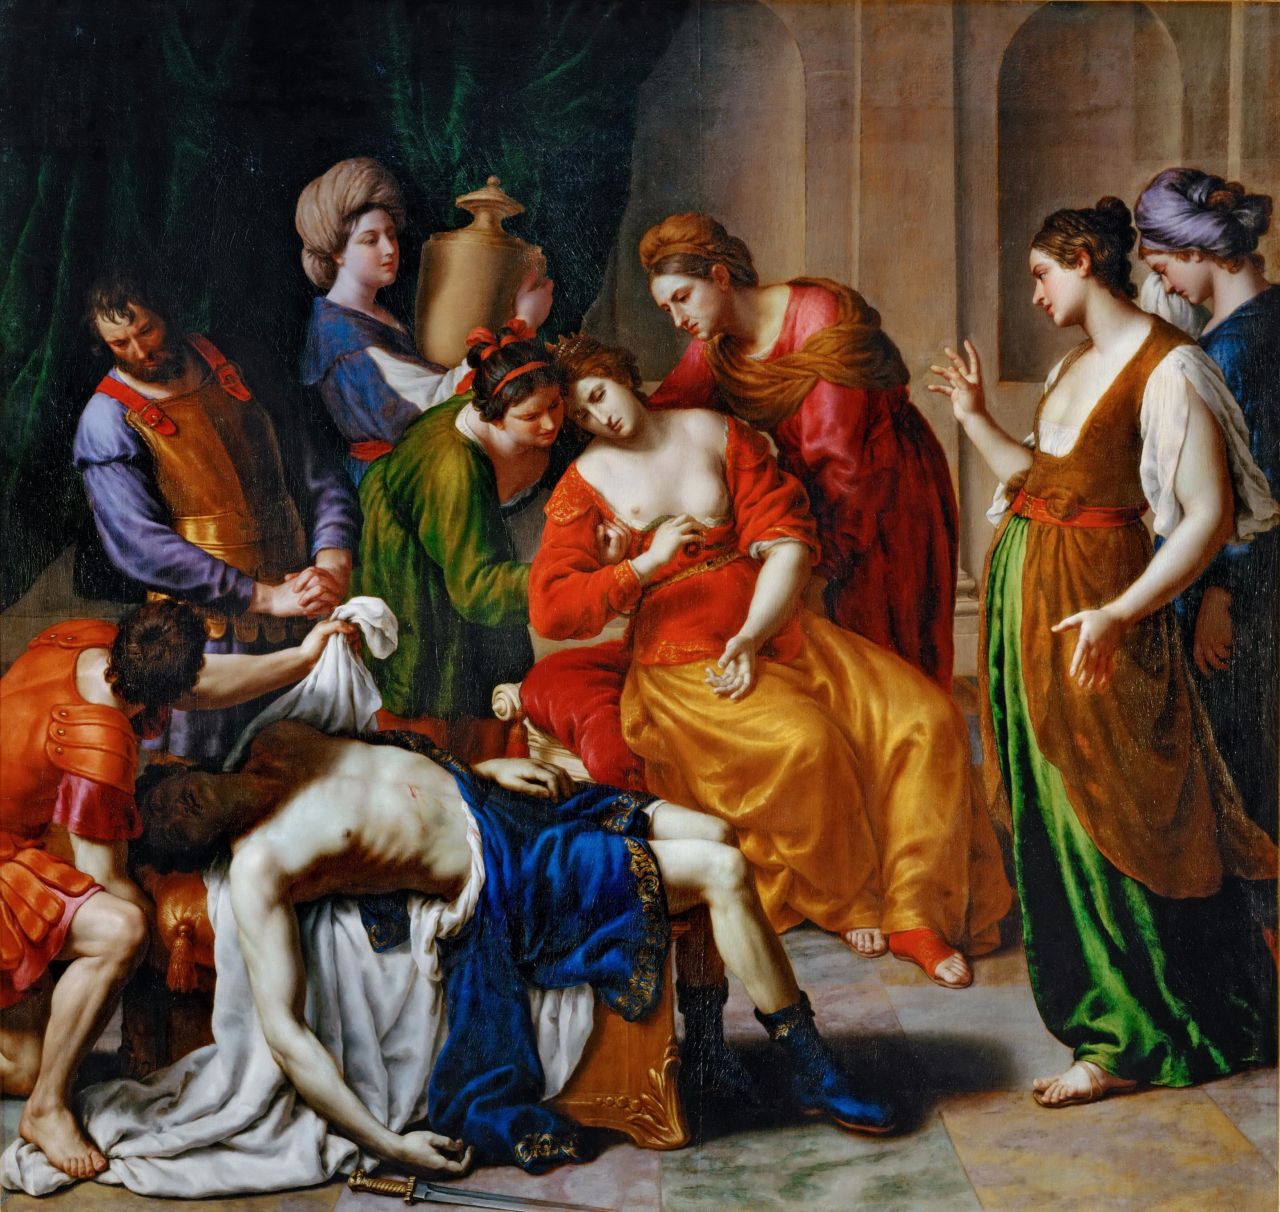 "The Death of Cleopatra" (c.1640) by Alessandro Turchi. 